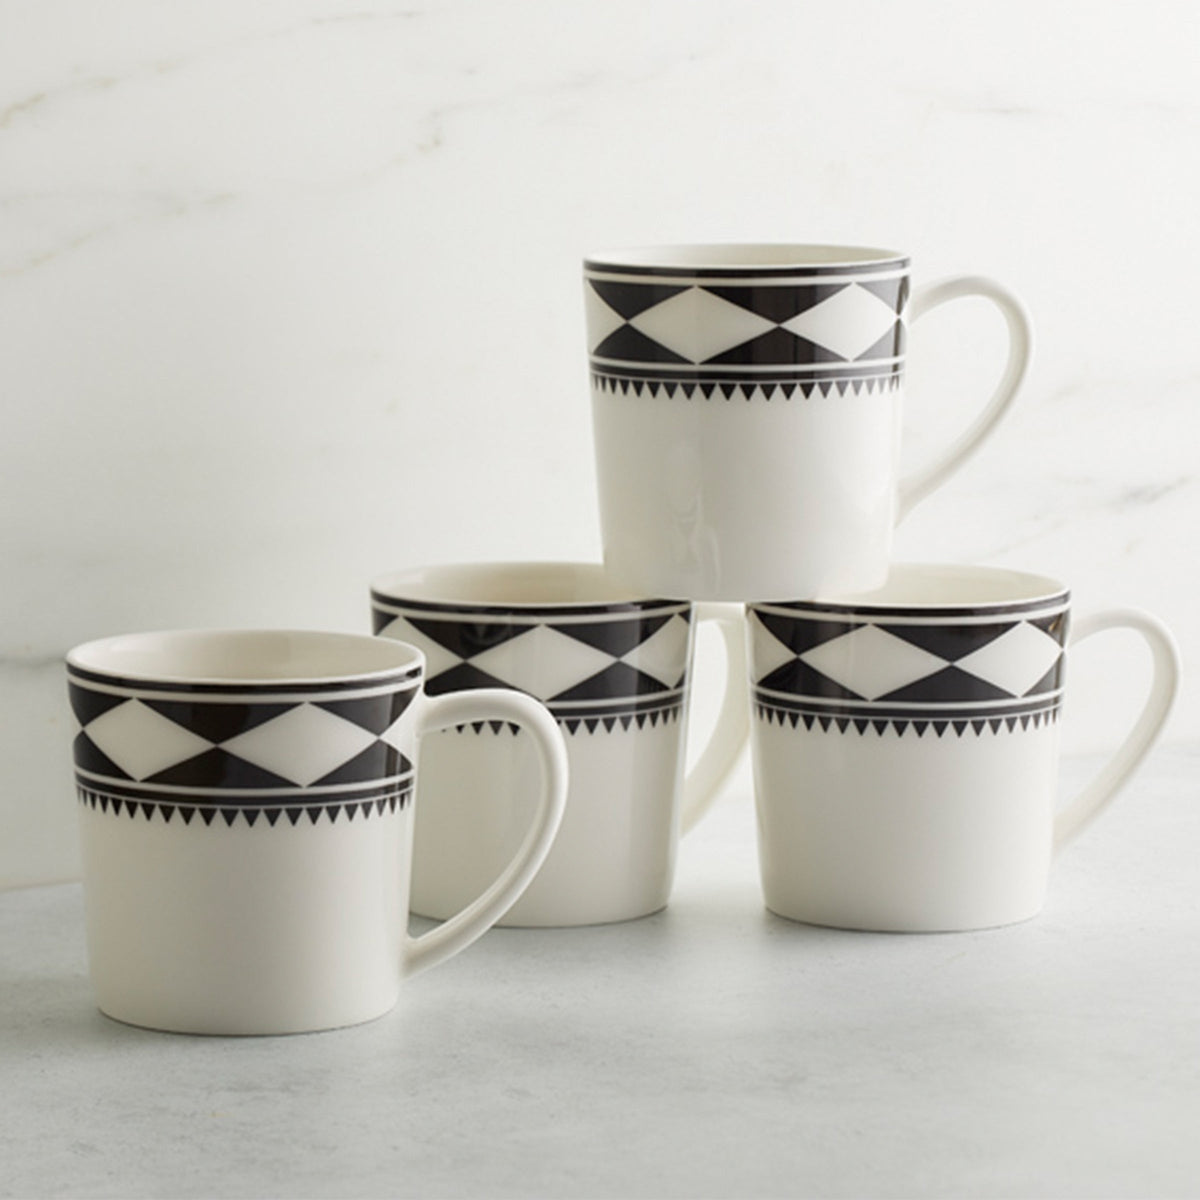 Four Fez Mugs with black and white designs by Caskata Artisanal Home.